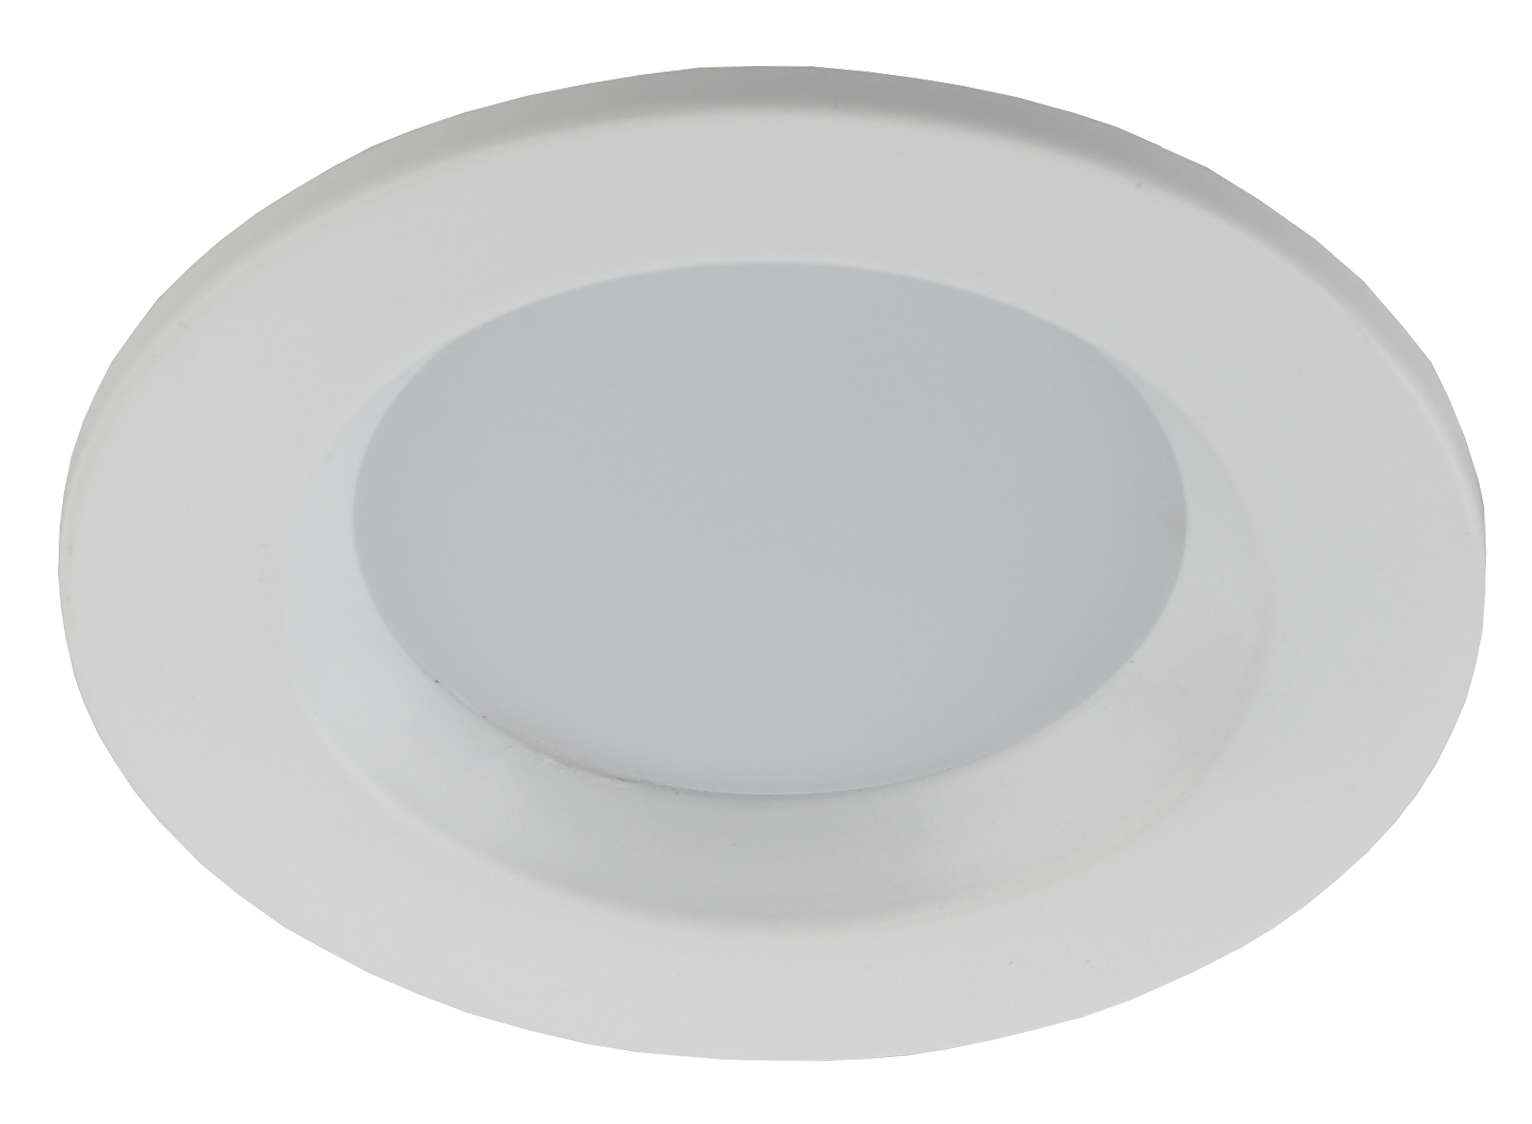 KL LED 16-18 Светильник ЭРА светодиодный даунлайт 18W 4000K 1280LM, белый (20/360)